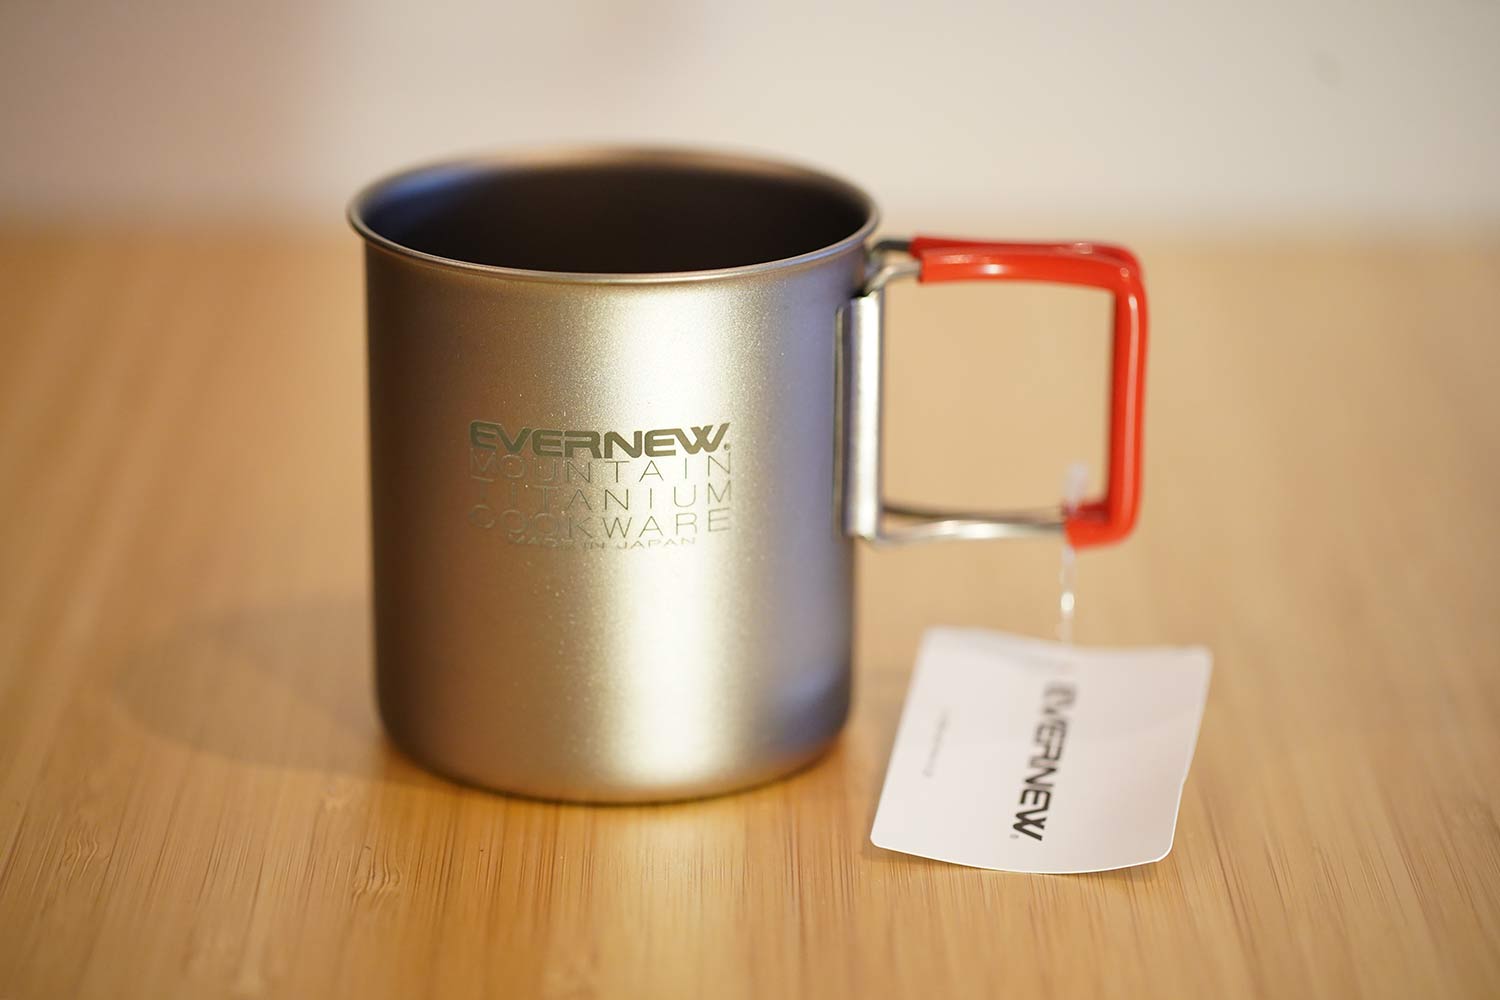 EVERNEW “Titanium Mug / Cup” | PORTAL(ポータル)